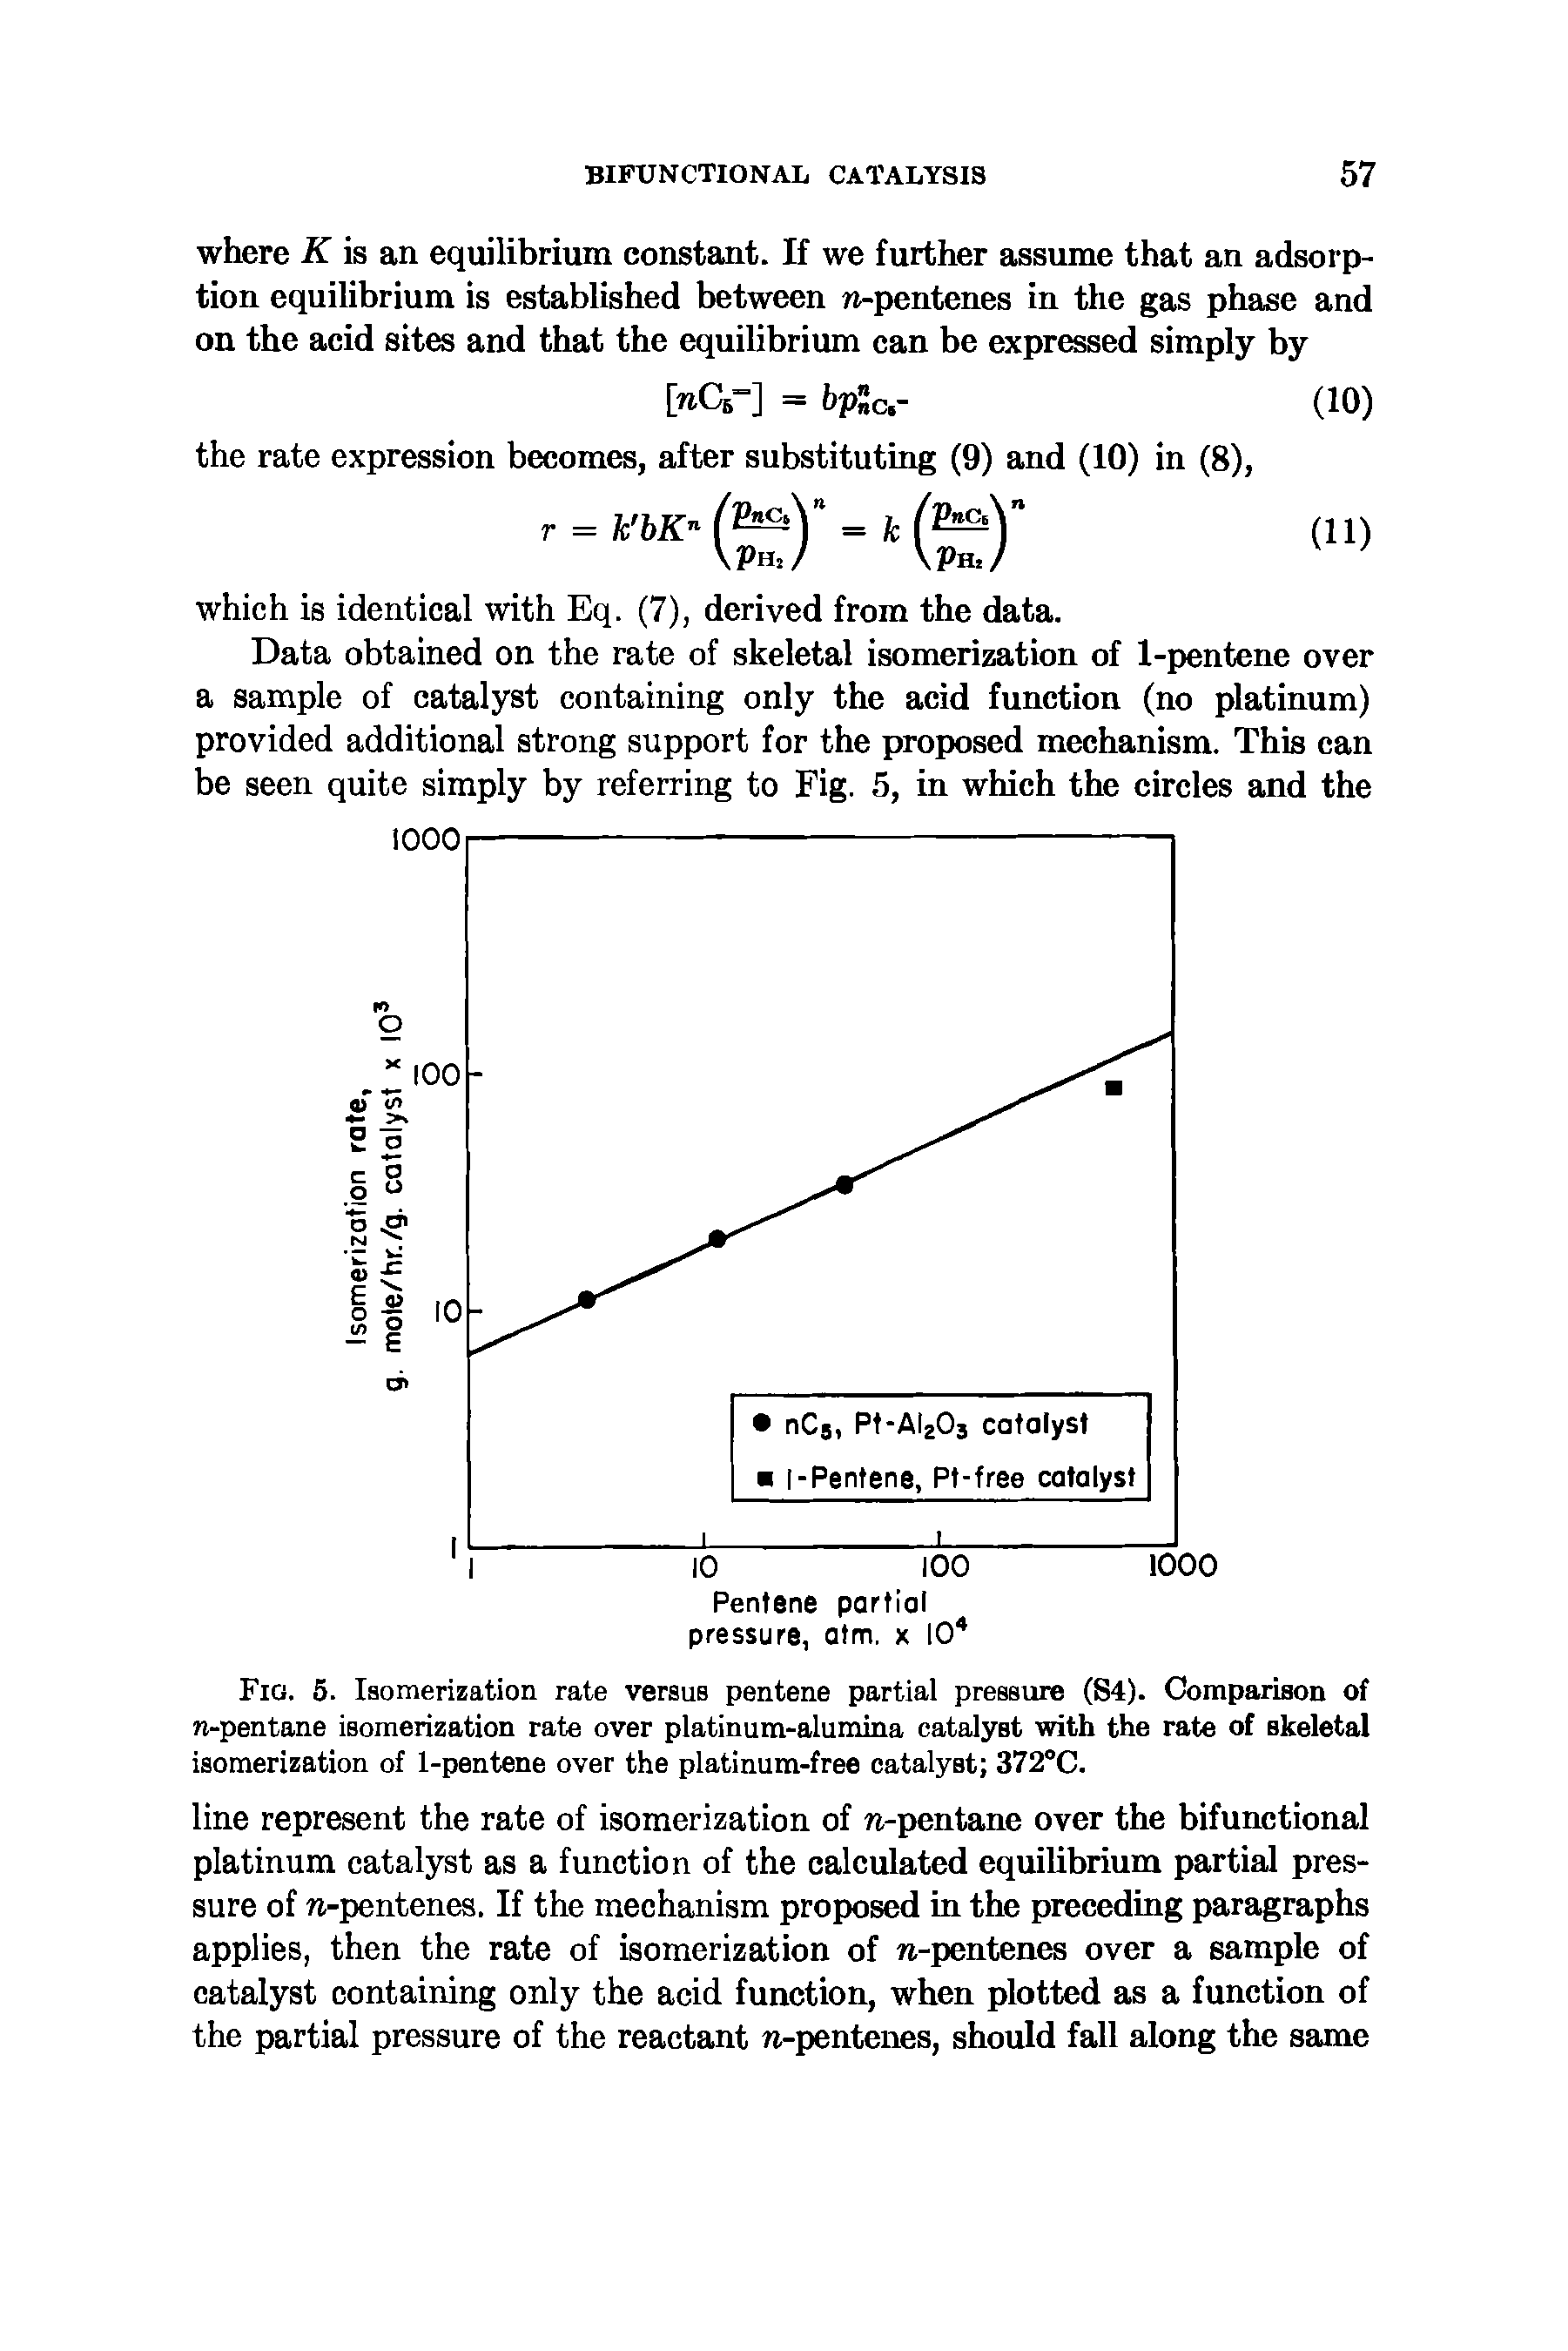 Fig. 5. Isomerization rate versus pentene partial pressure (S4). Comparison of n-pentane isomerization rate over platinum-alumina catalyst with the rate of skeletal isomerization of 1-pentene over the platinum-free catalyst 372°C.